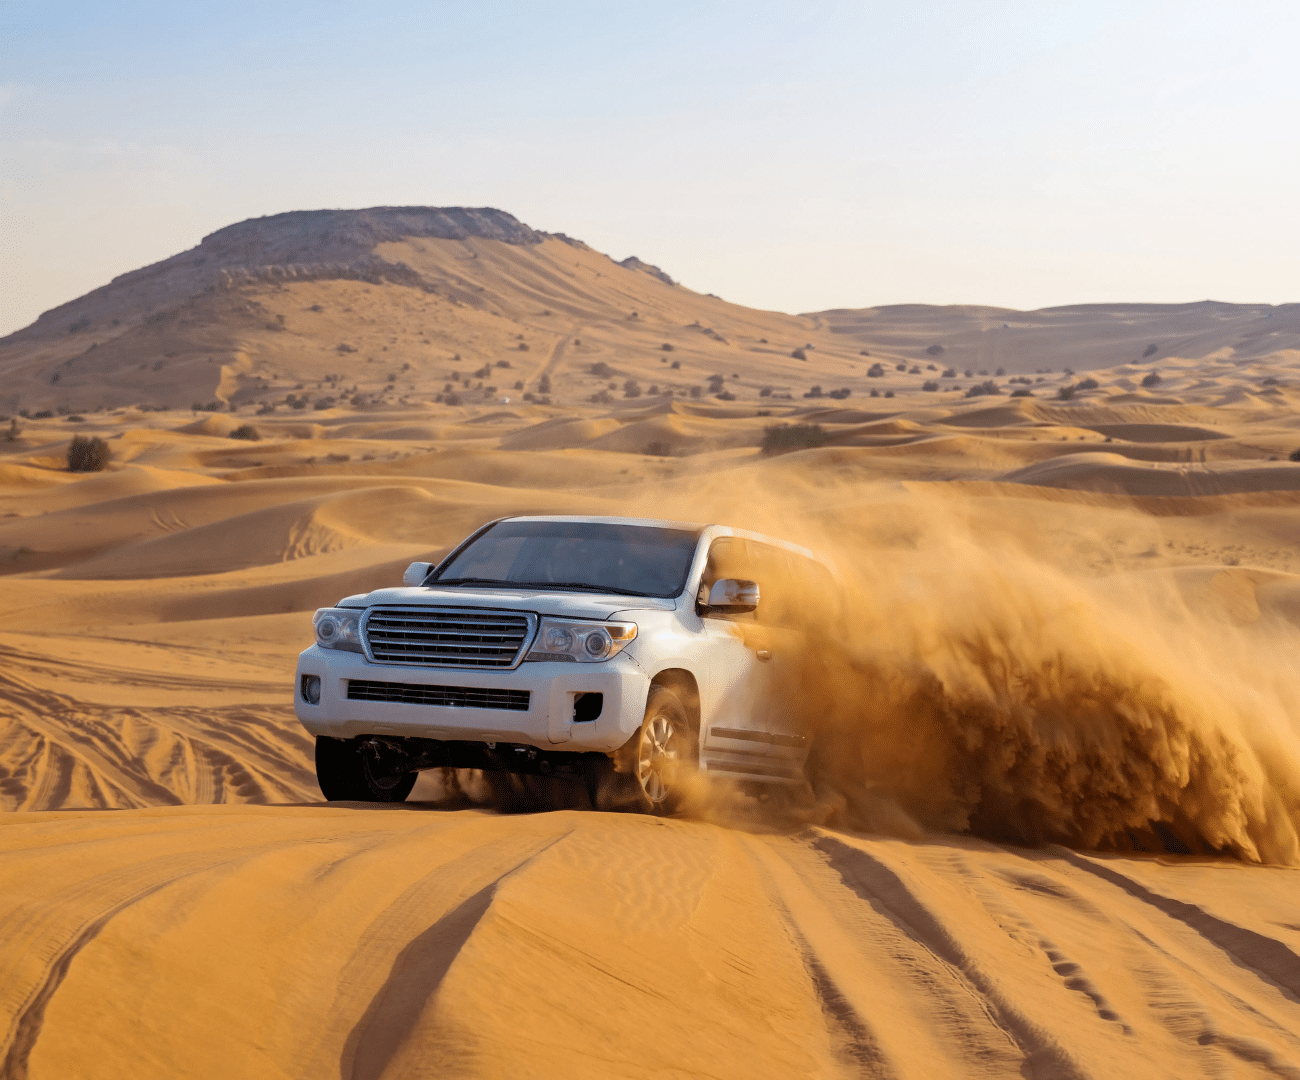 Dune Bashing in Dubai tour